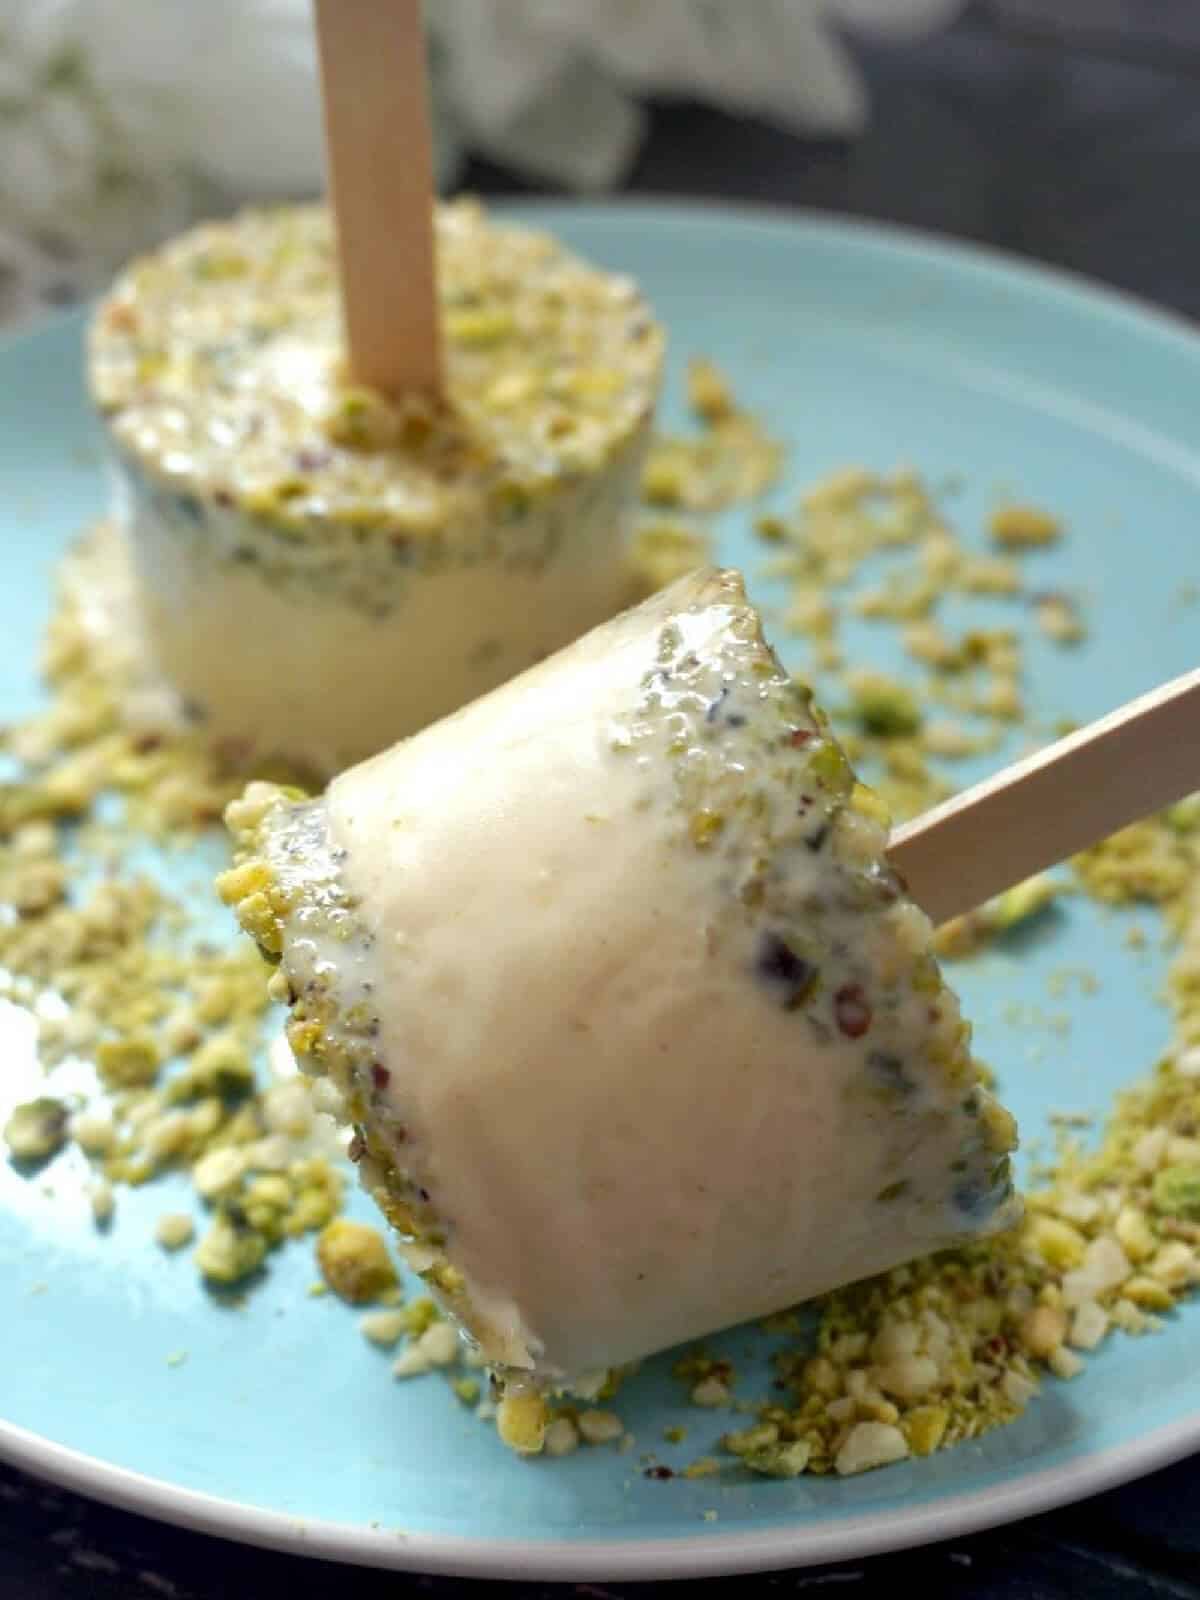 2 kulfi ice creams on a light blue plate with chopped pistachio.